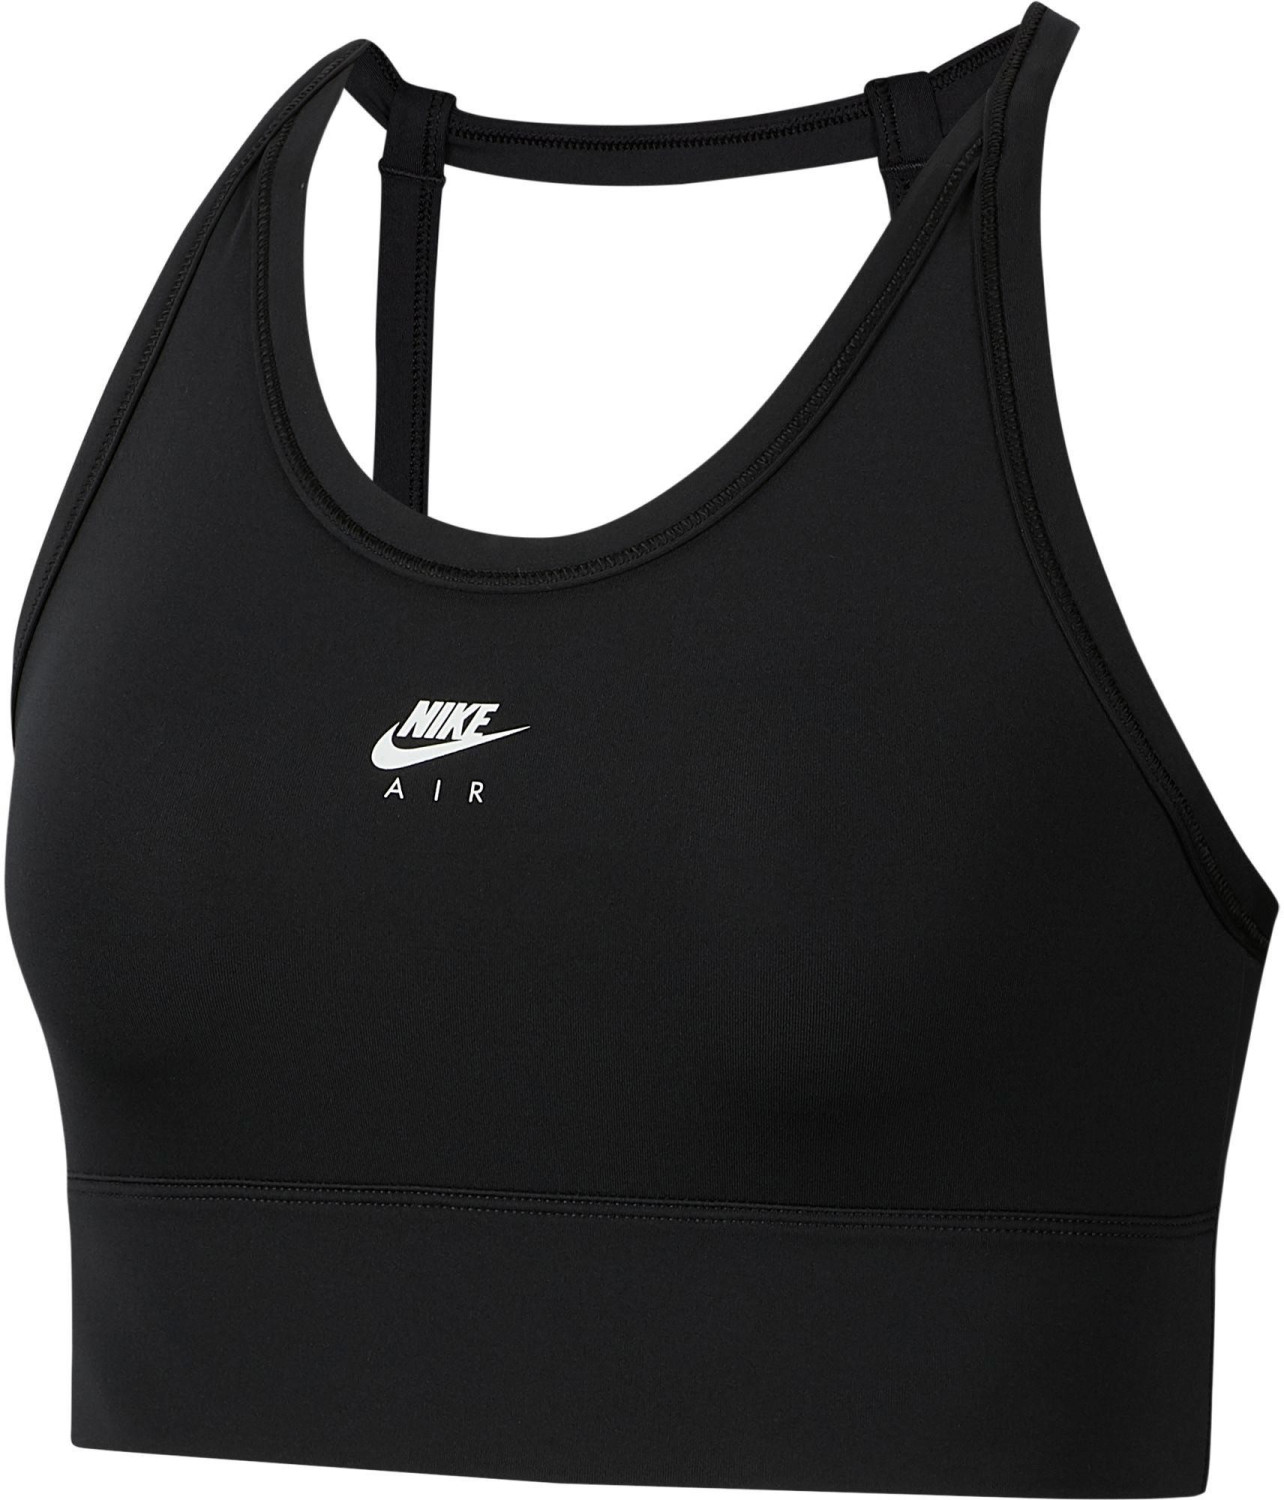 Nike Air Swoosh ( CJ0700) black/white